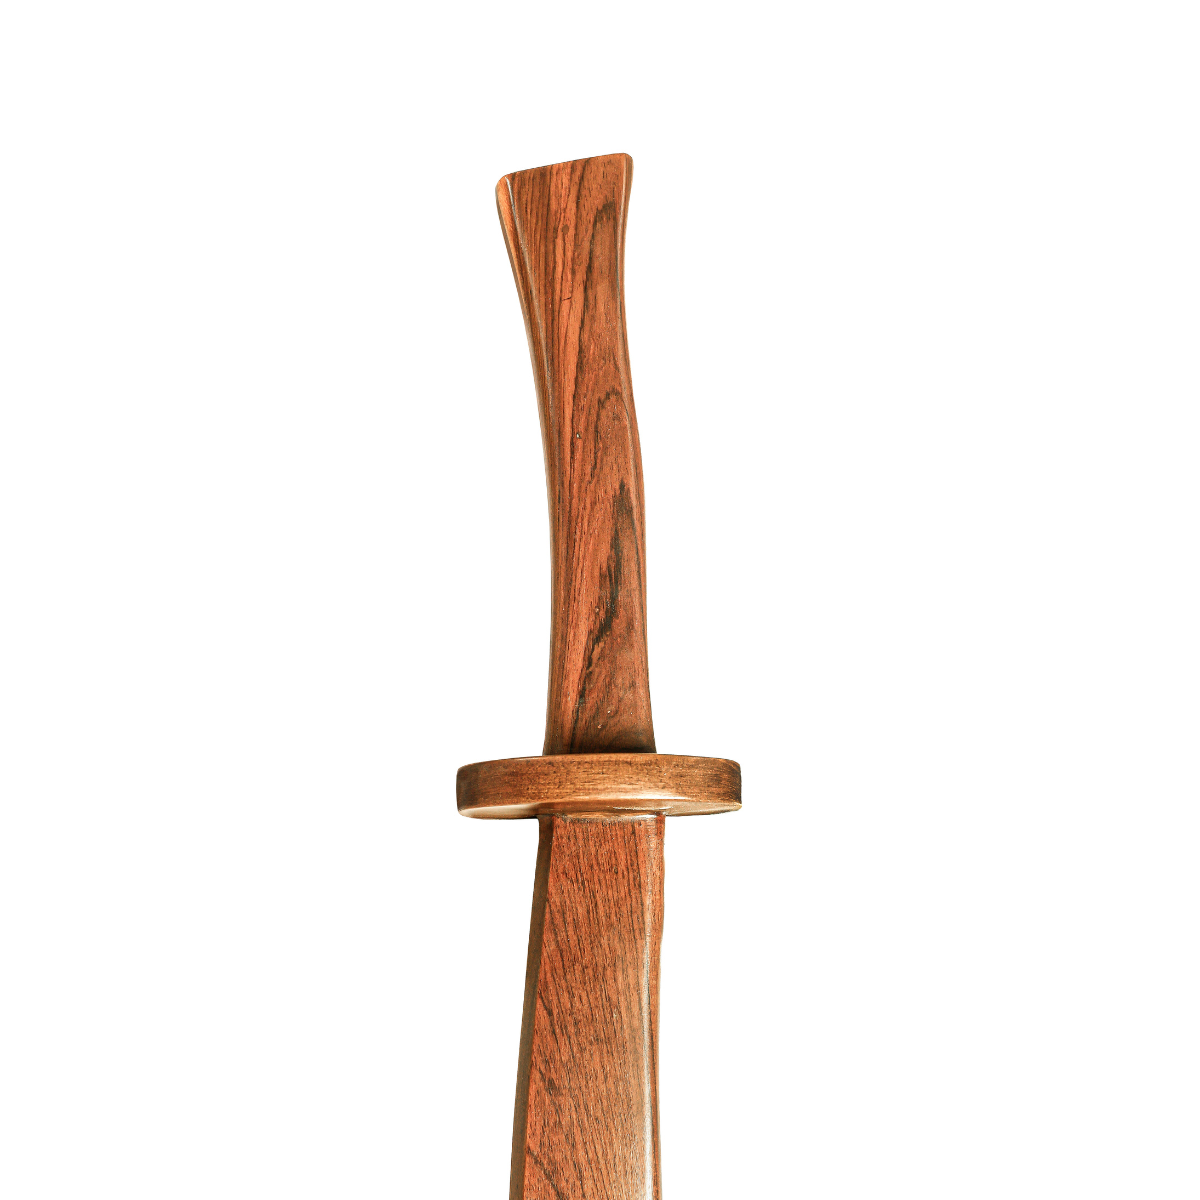 Wushu Wooden Practice Sword - Type A 4